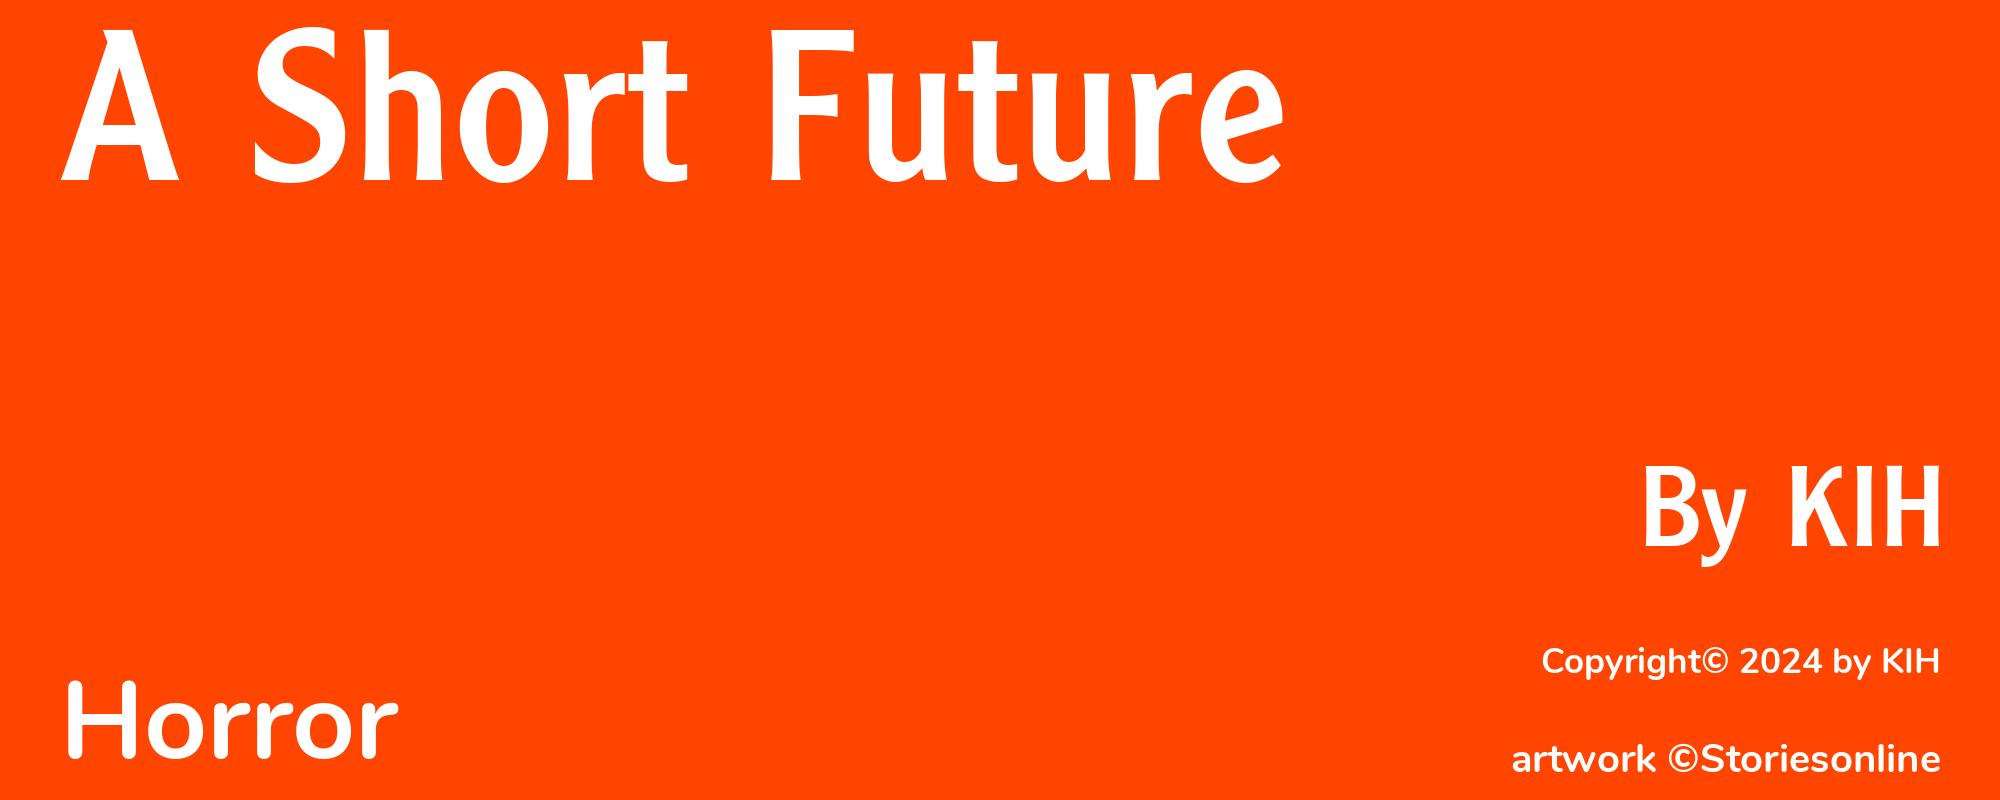 A Short Future - Cover